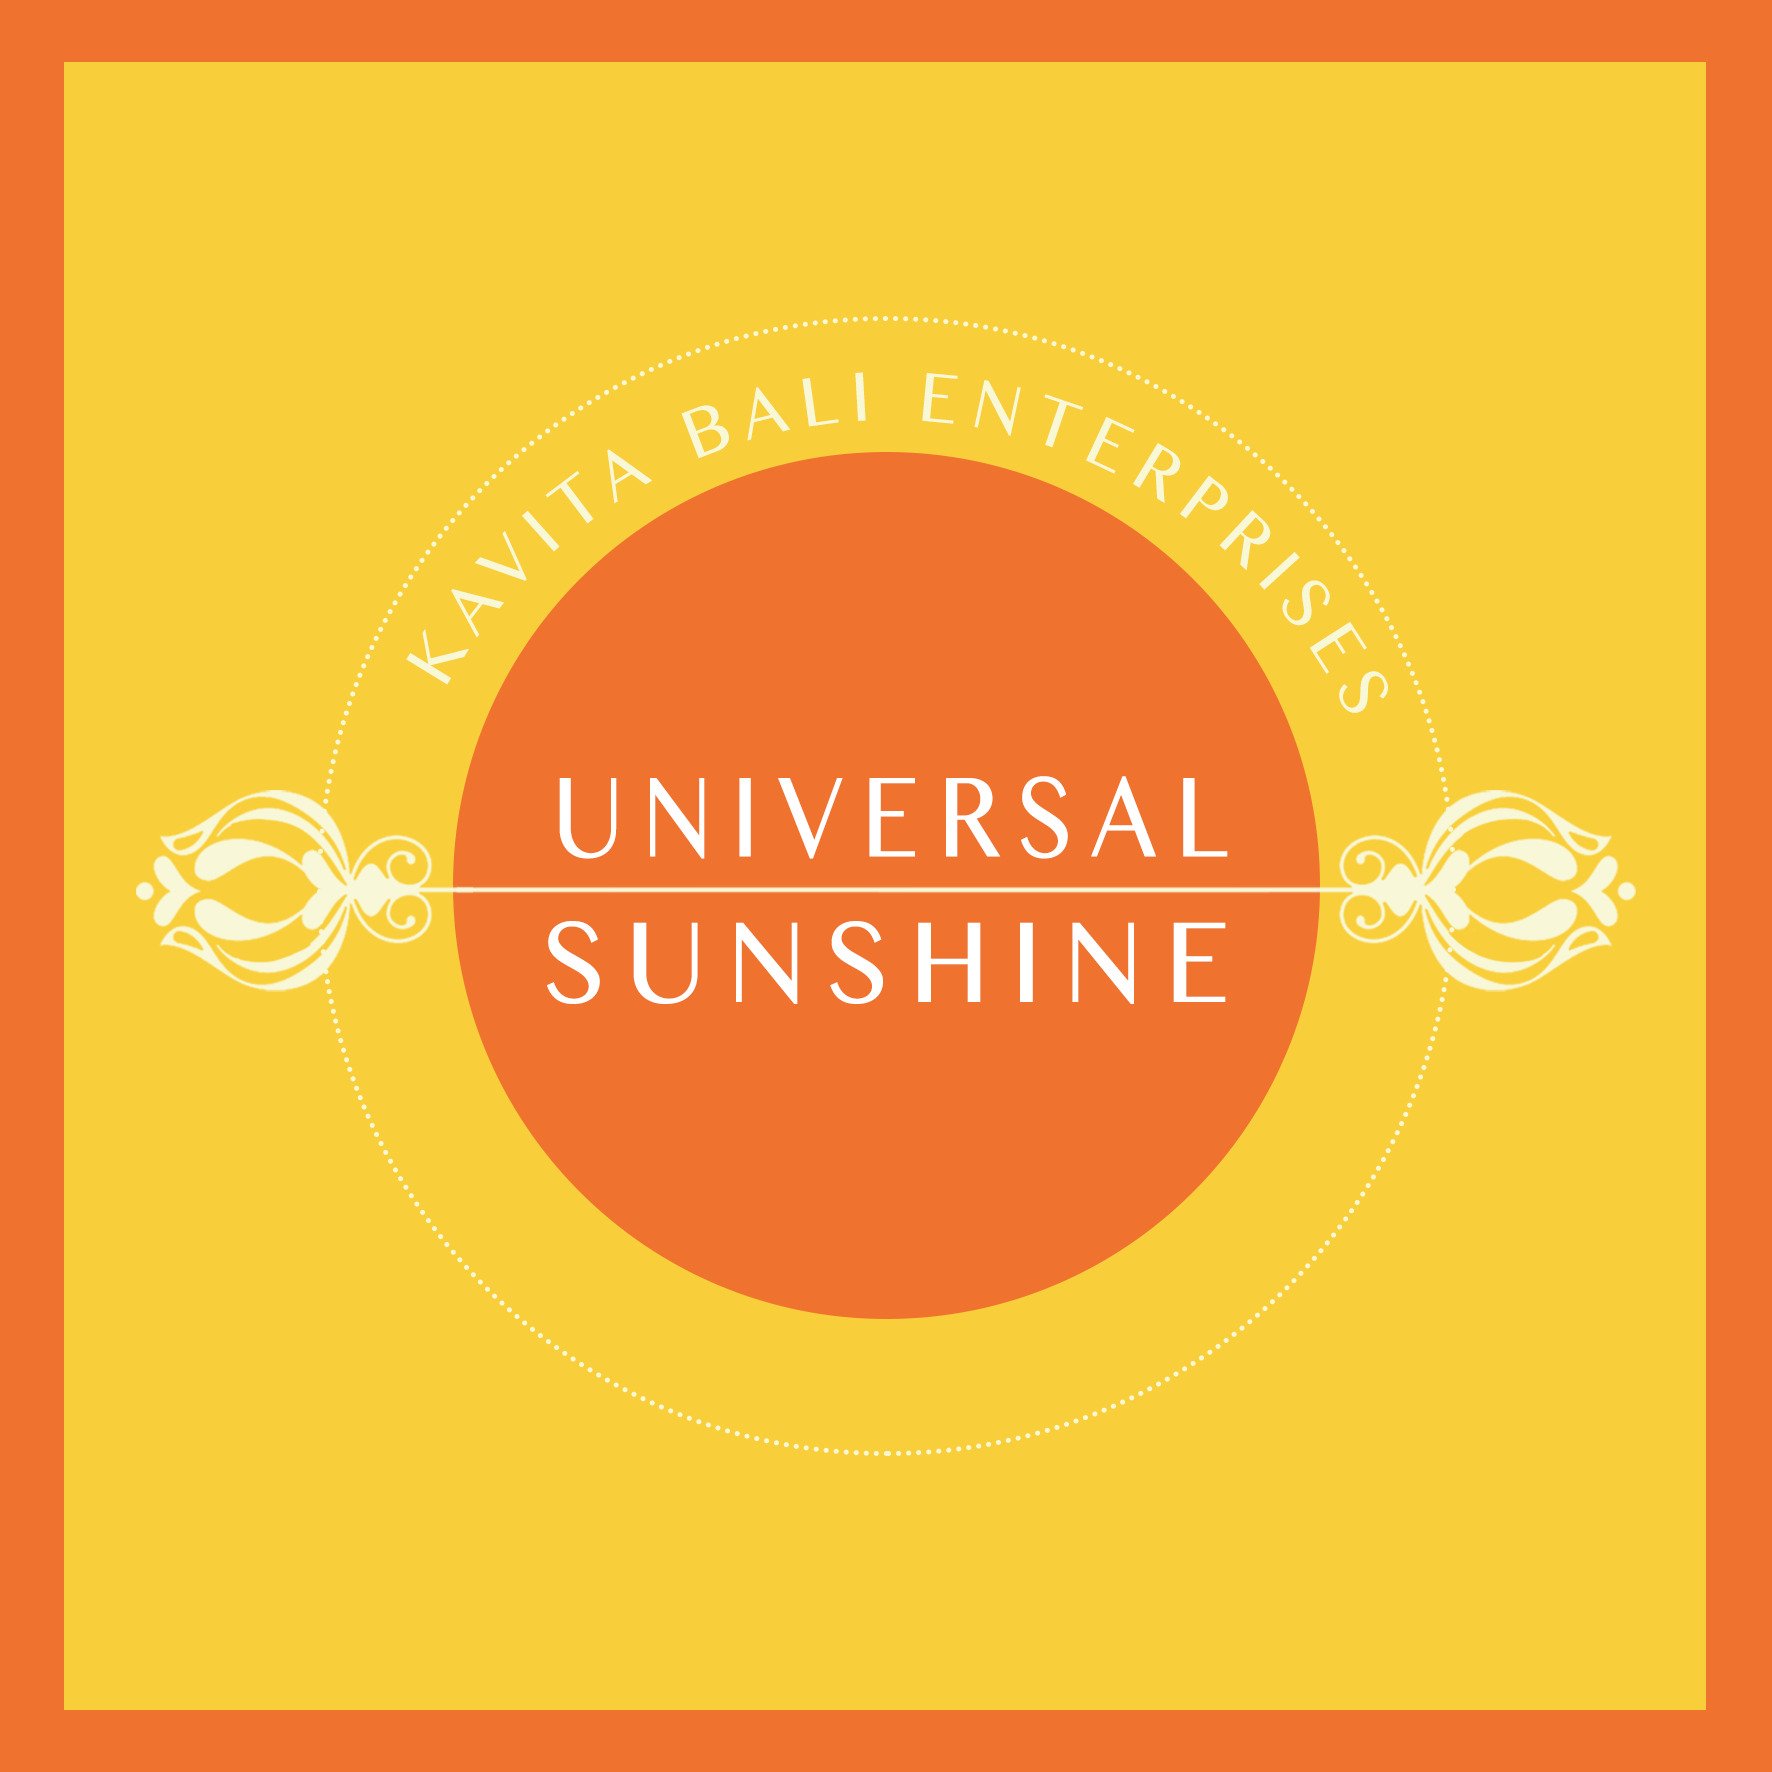 Universal Sunshine